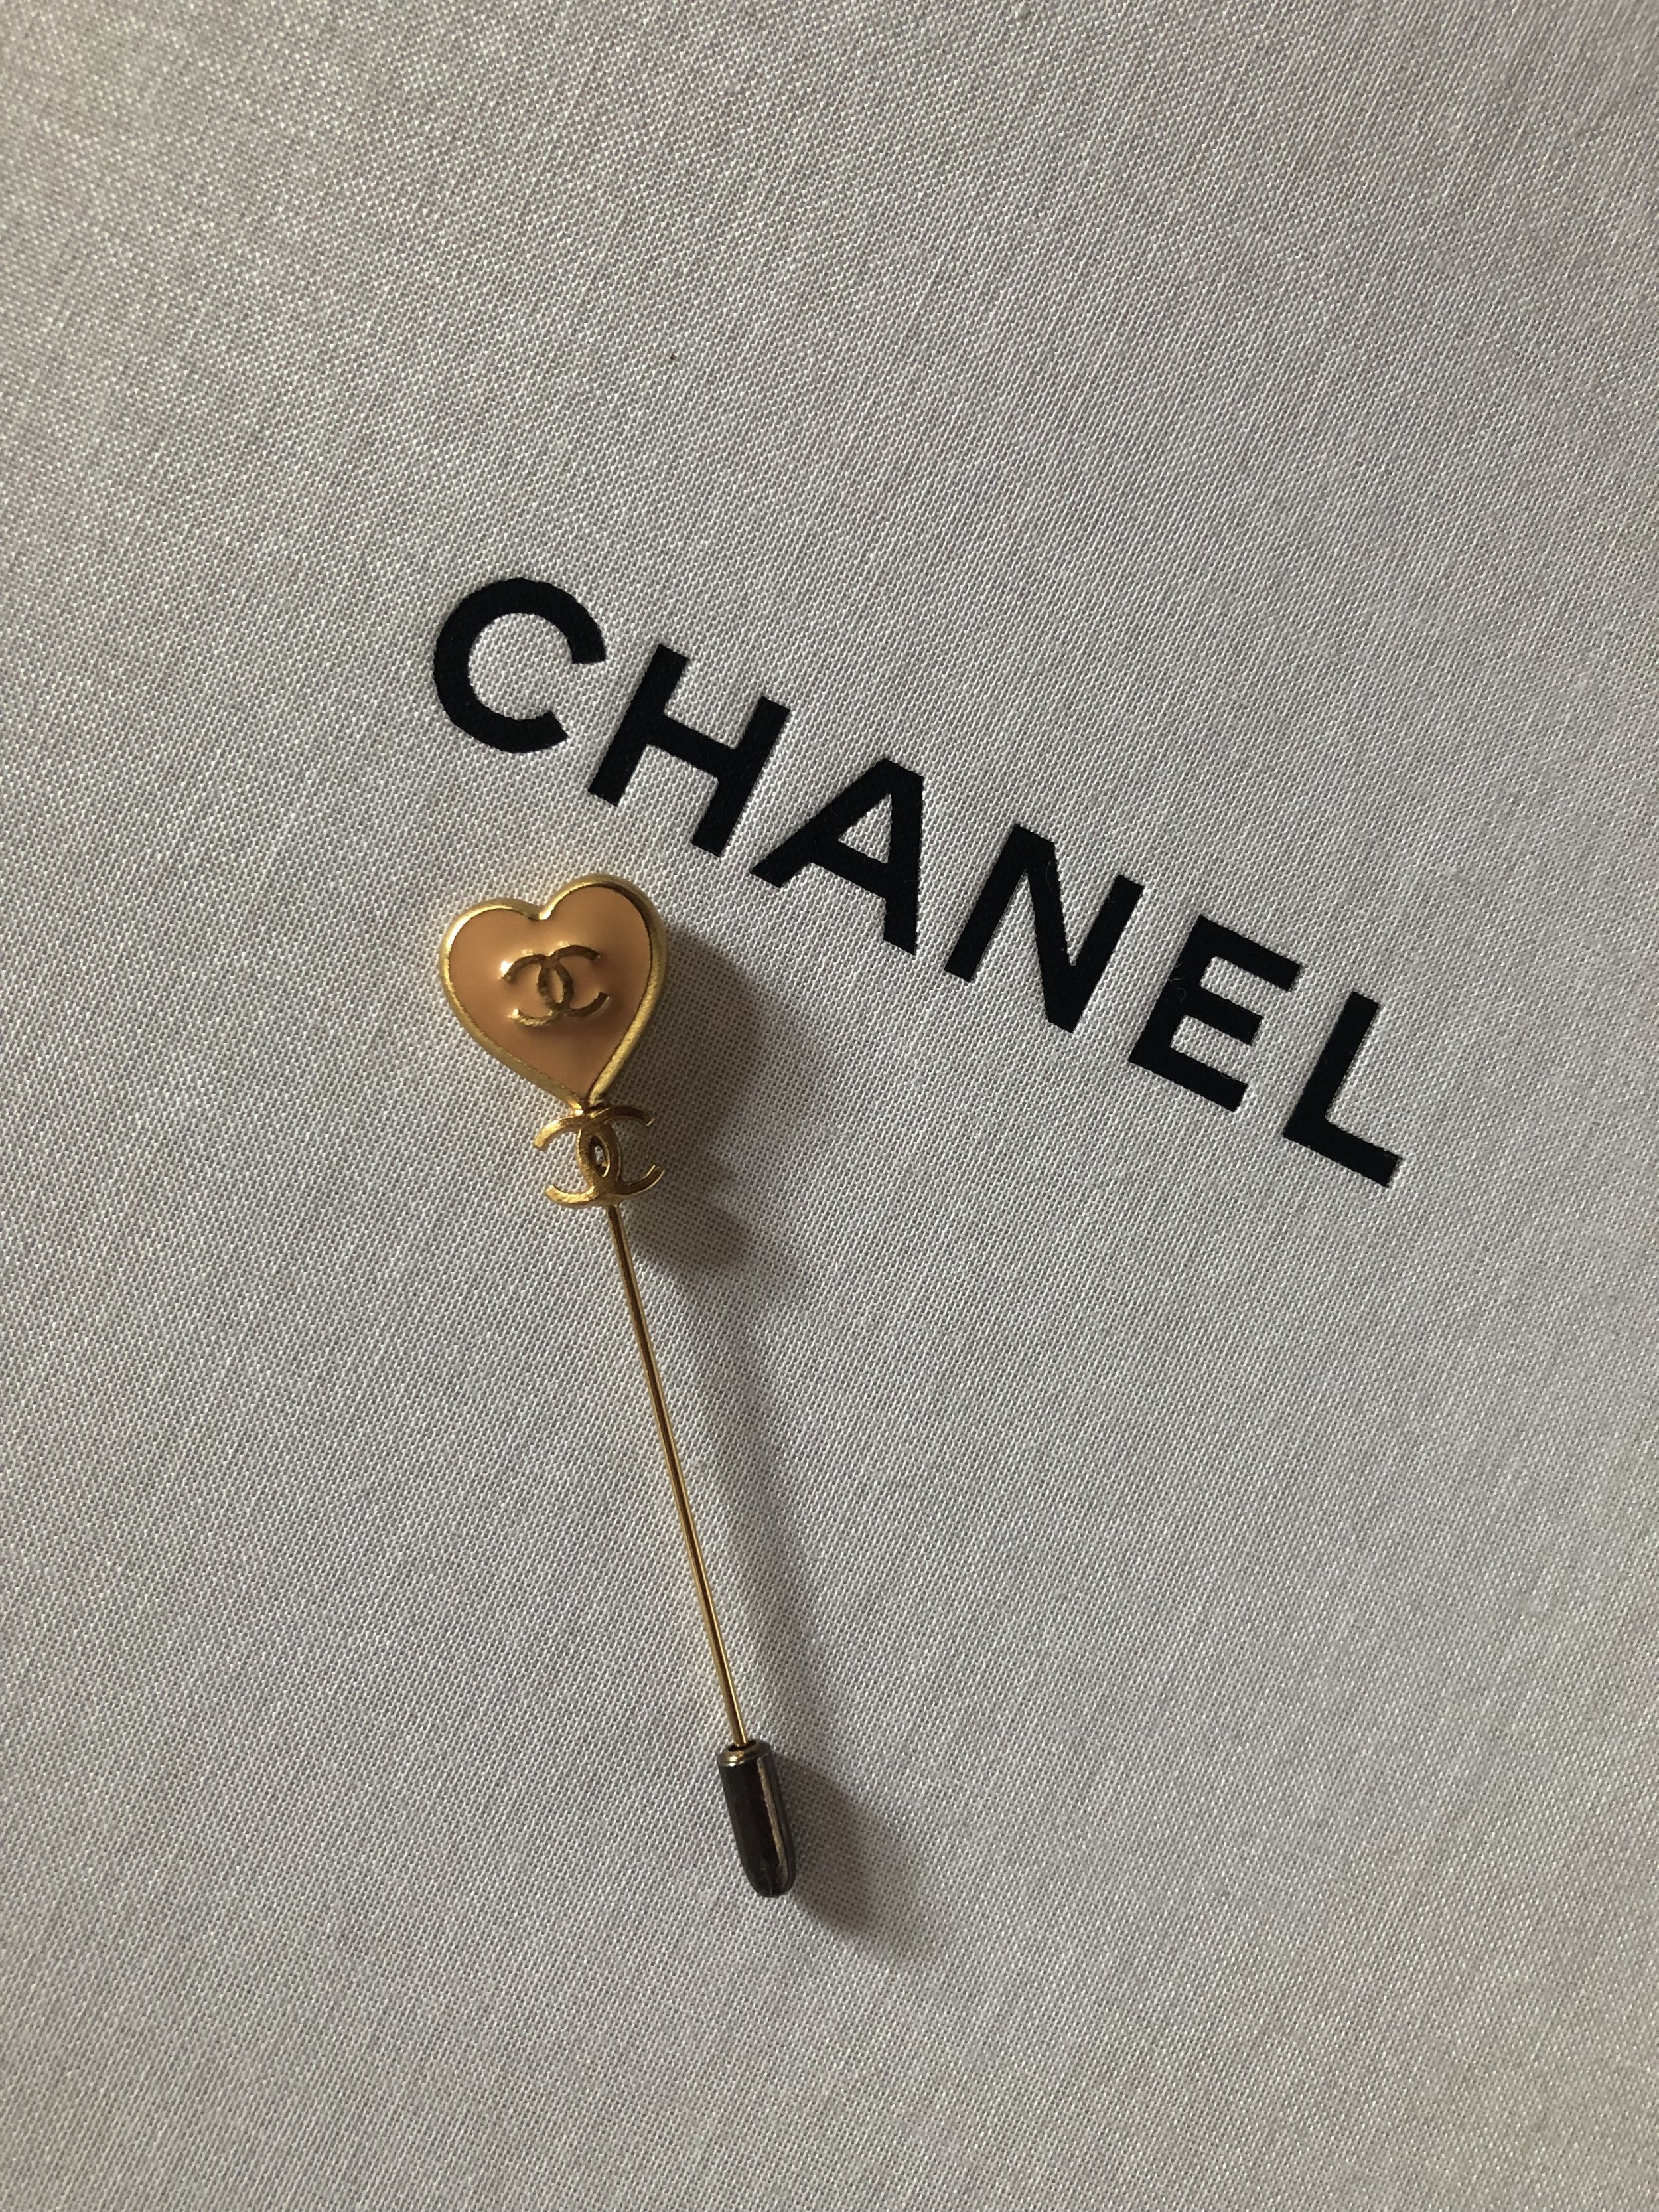 DIY Chanel Camelia Flower Pin – Glam York